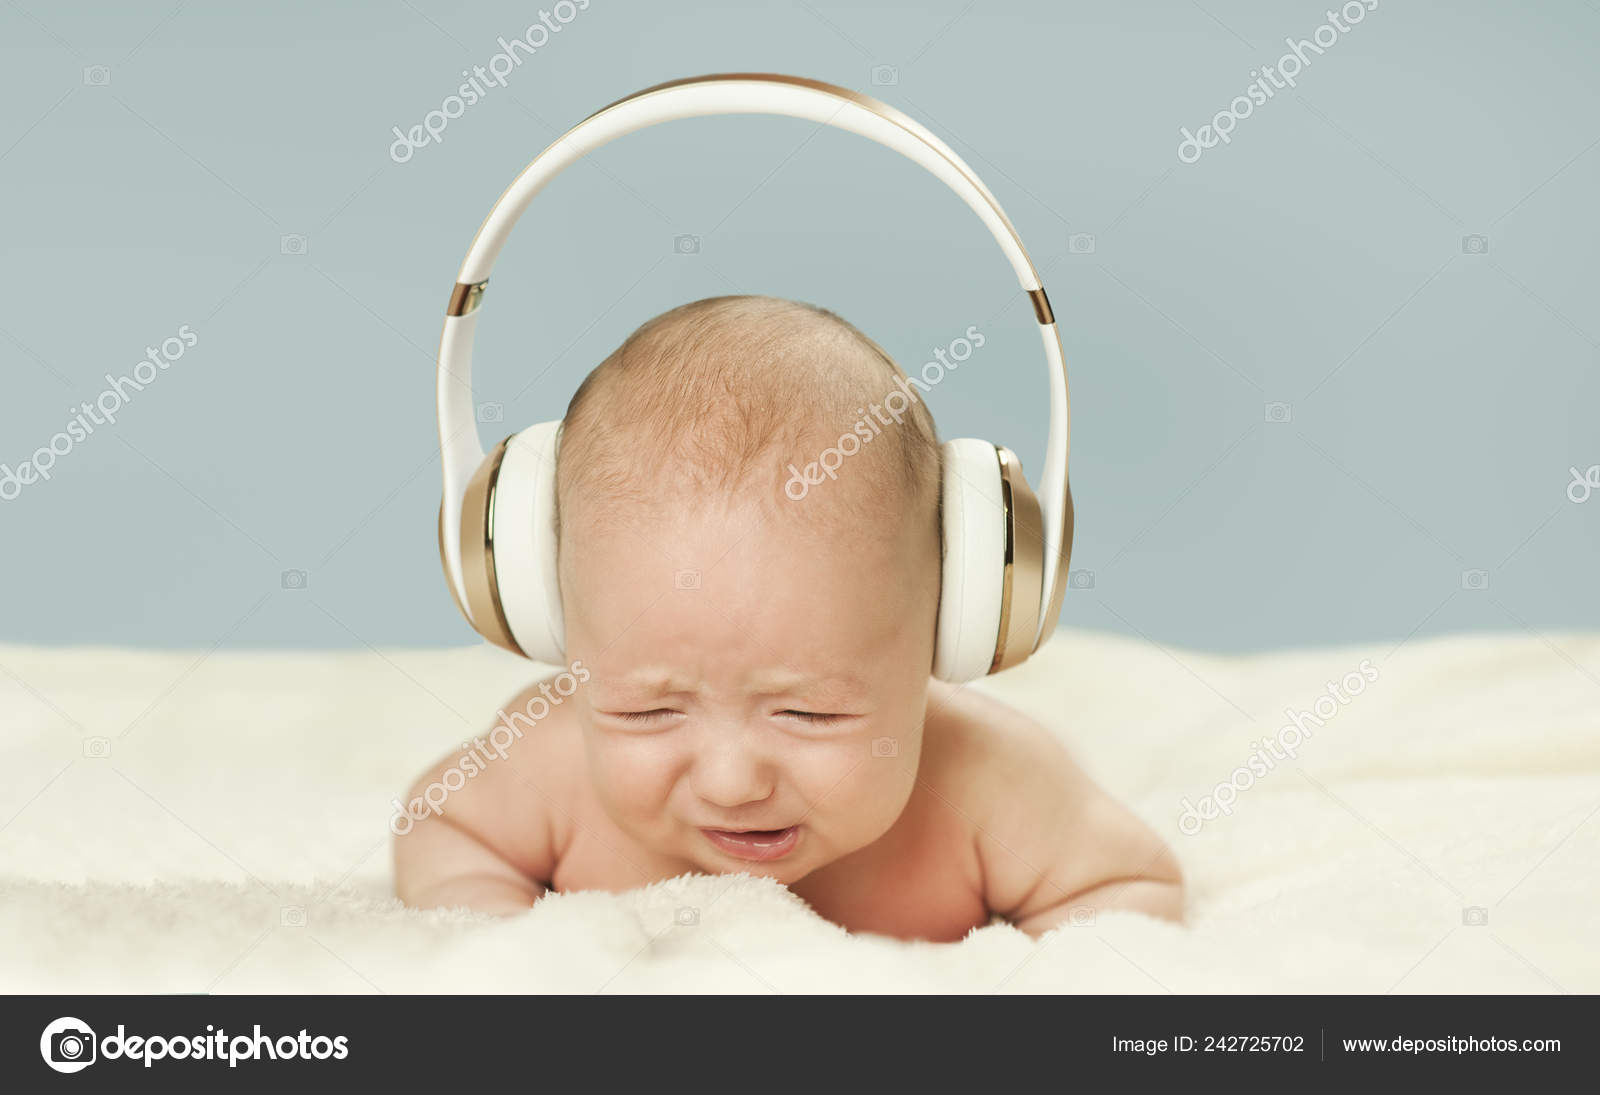 headphones for newborn baby